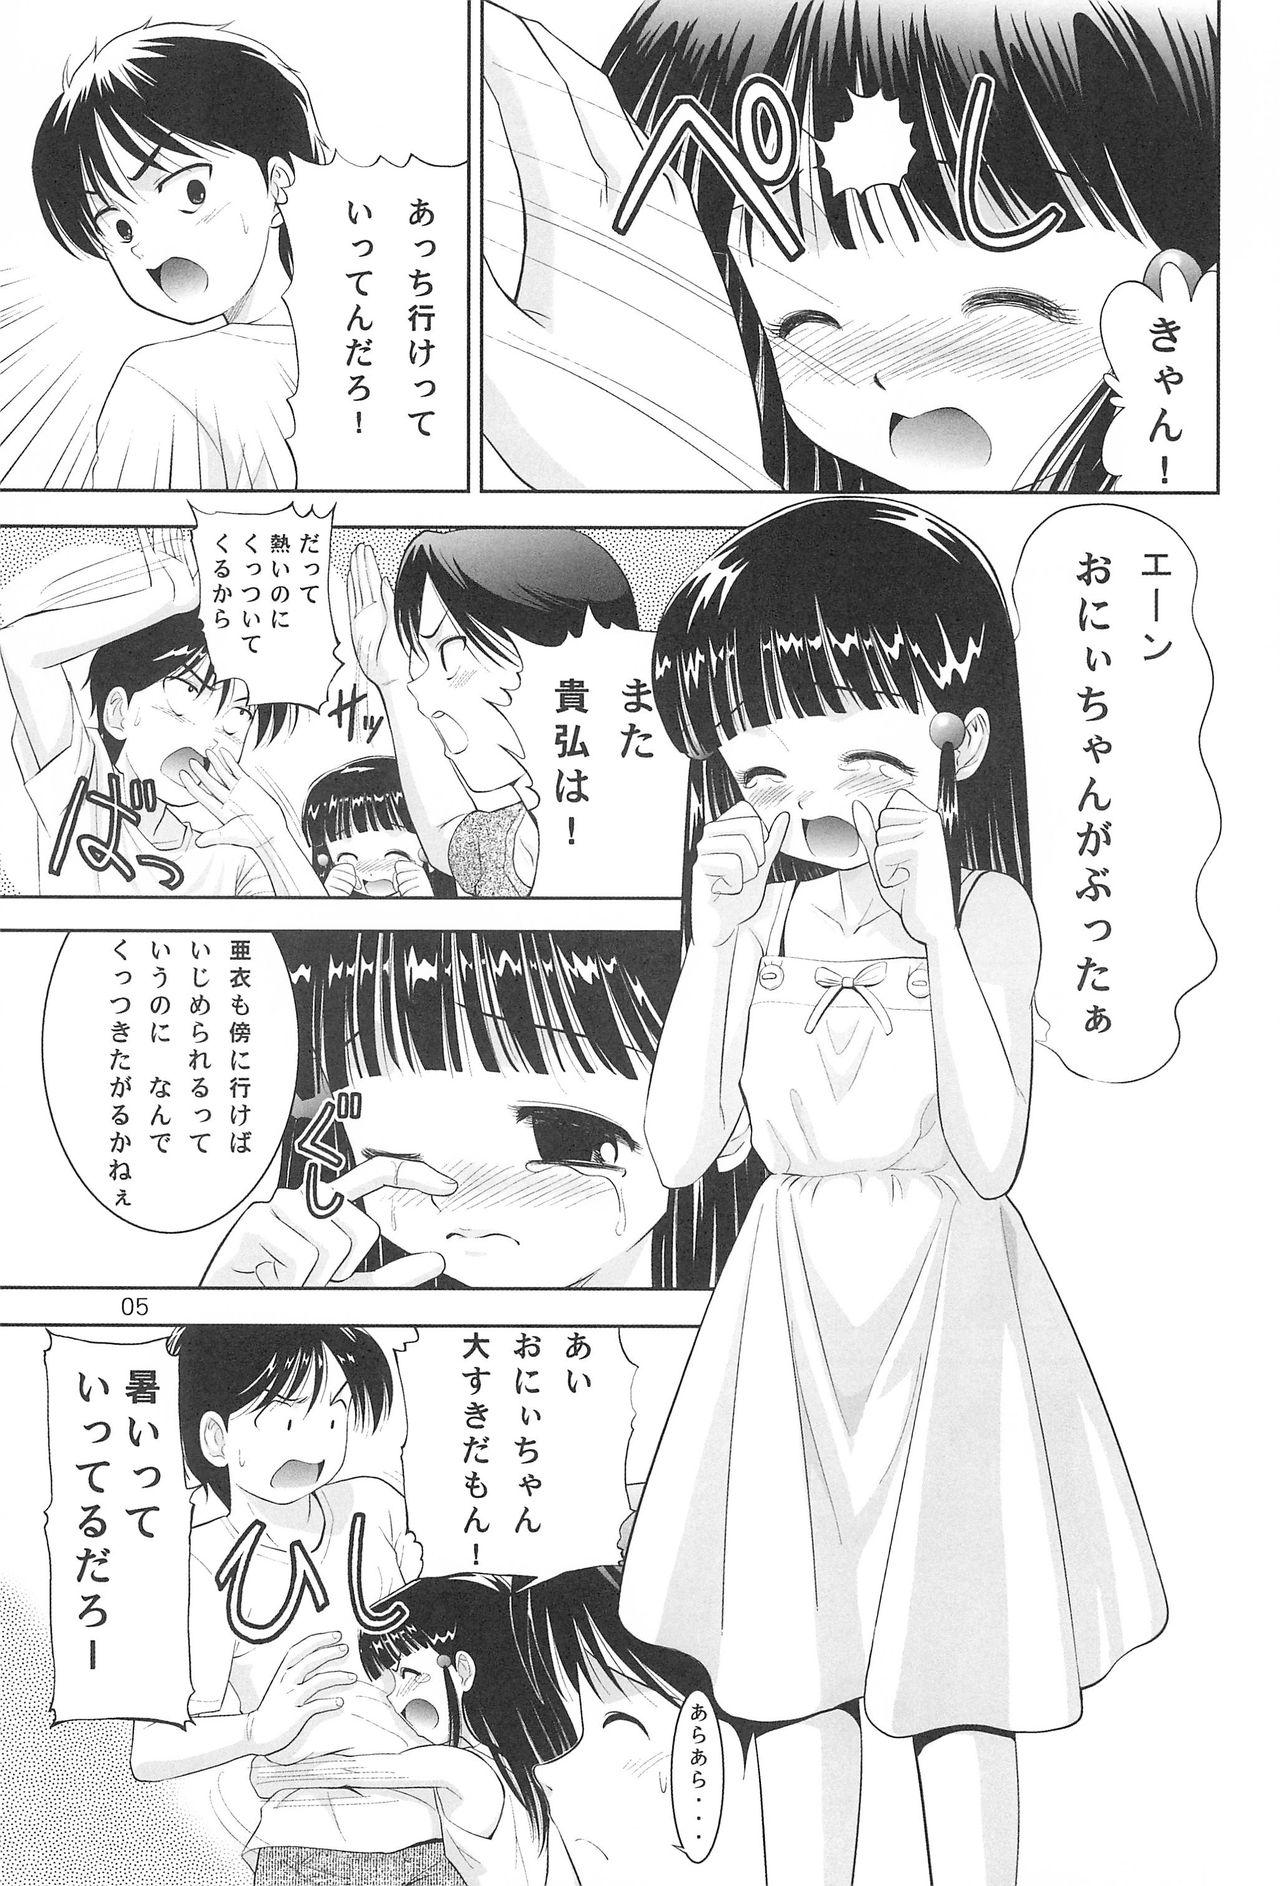 Furry Little Lovers 6 - Mizube no Shoujo Deep Throat - Page 4